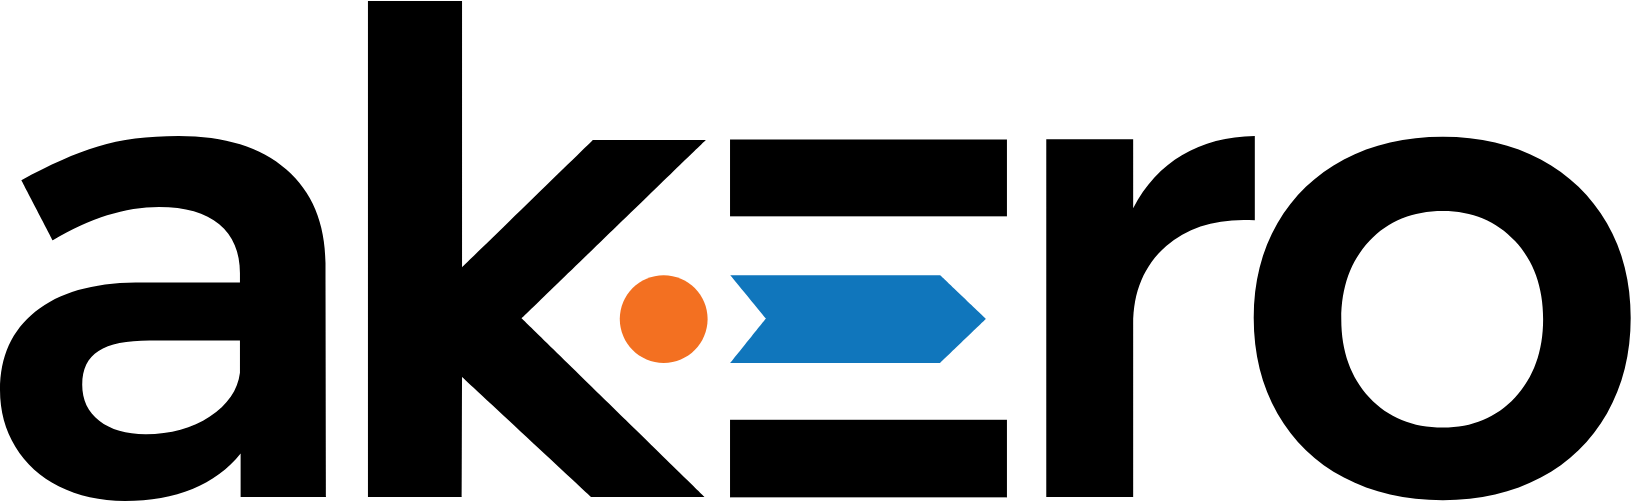 Akero Therapeutics logo large (transparent PNG)